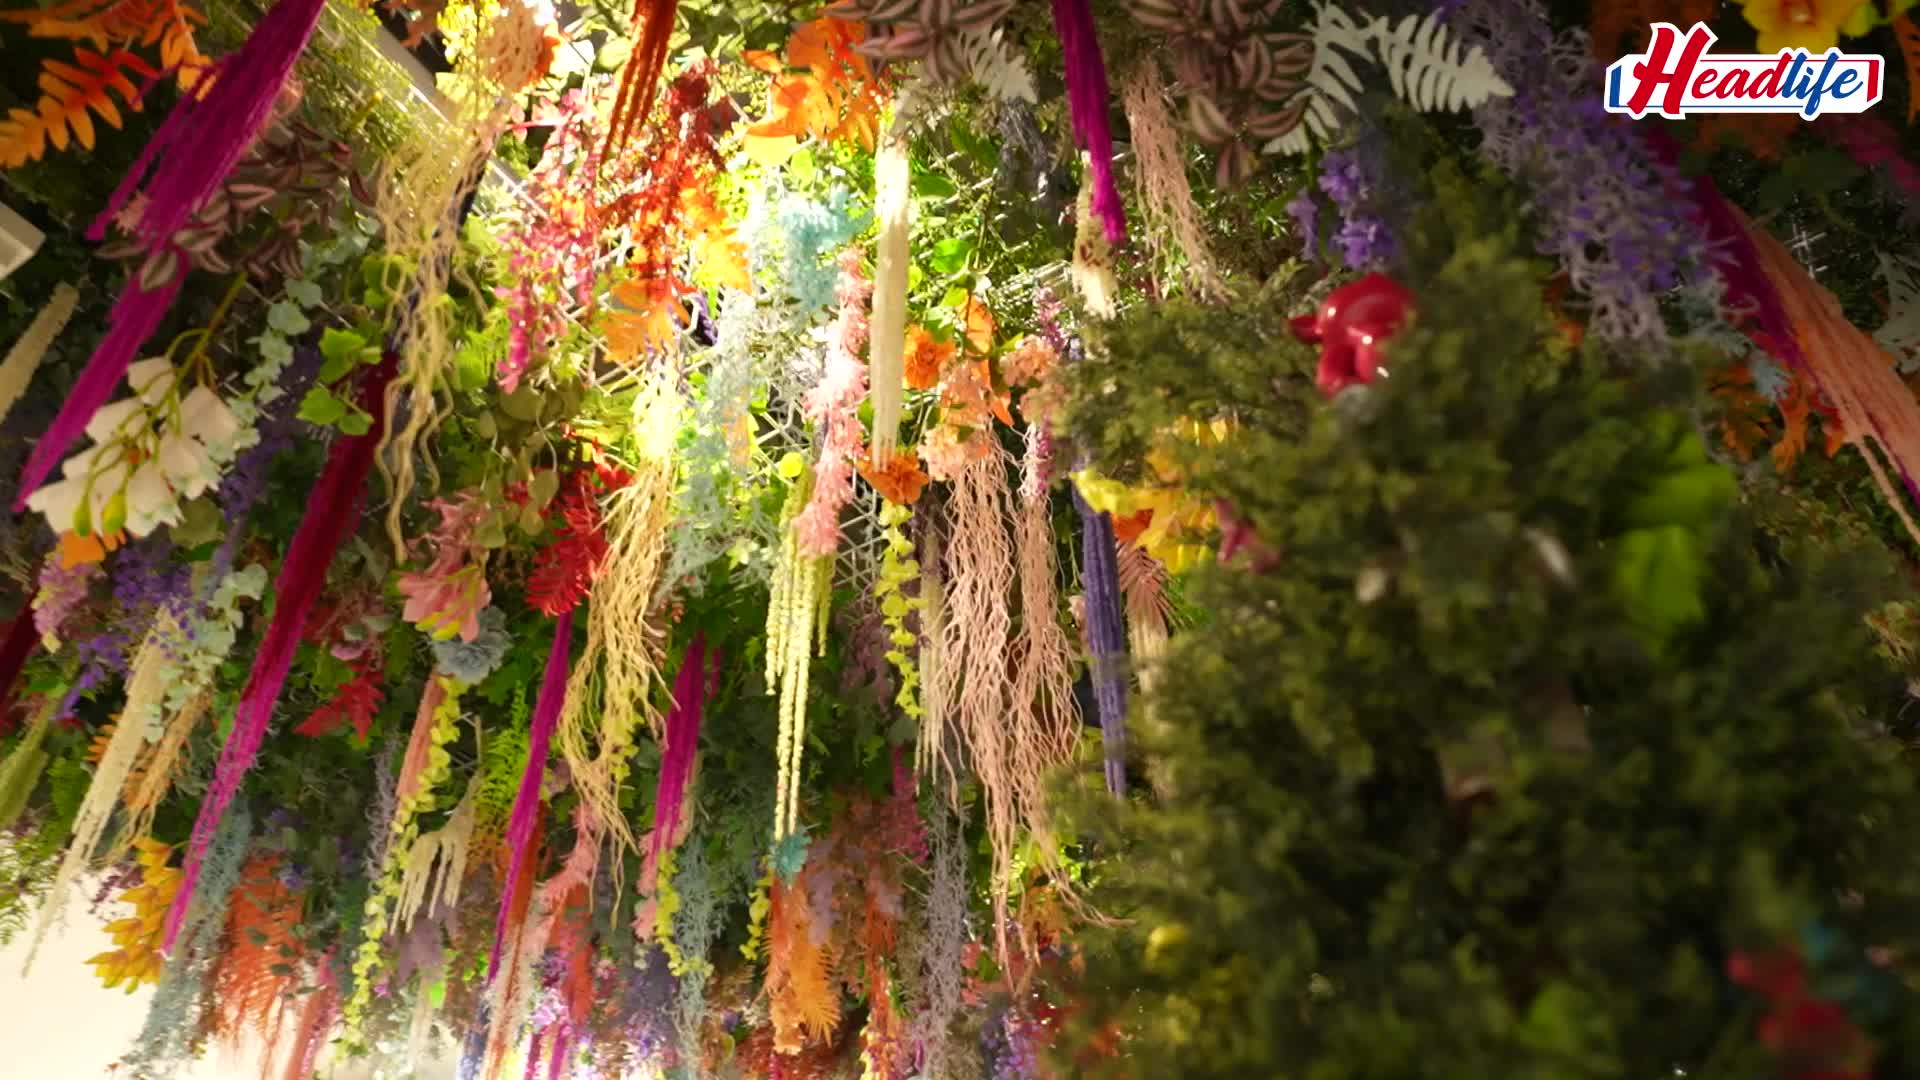 BE@RBRICK展覽背後｜極吸睛手製花藝裝置 專訪本地花藝師Rose Lee讓展場變藝術花園